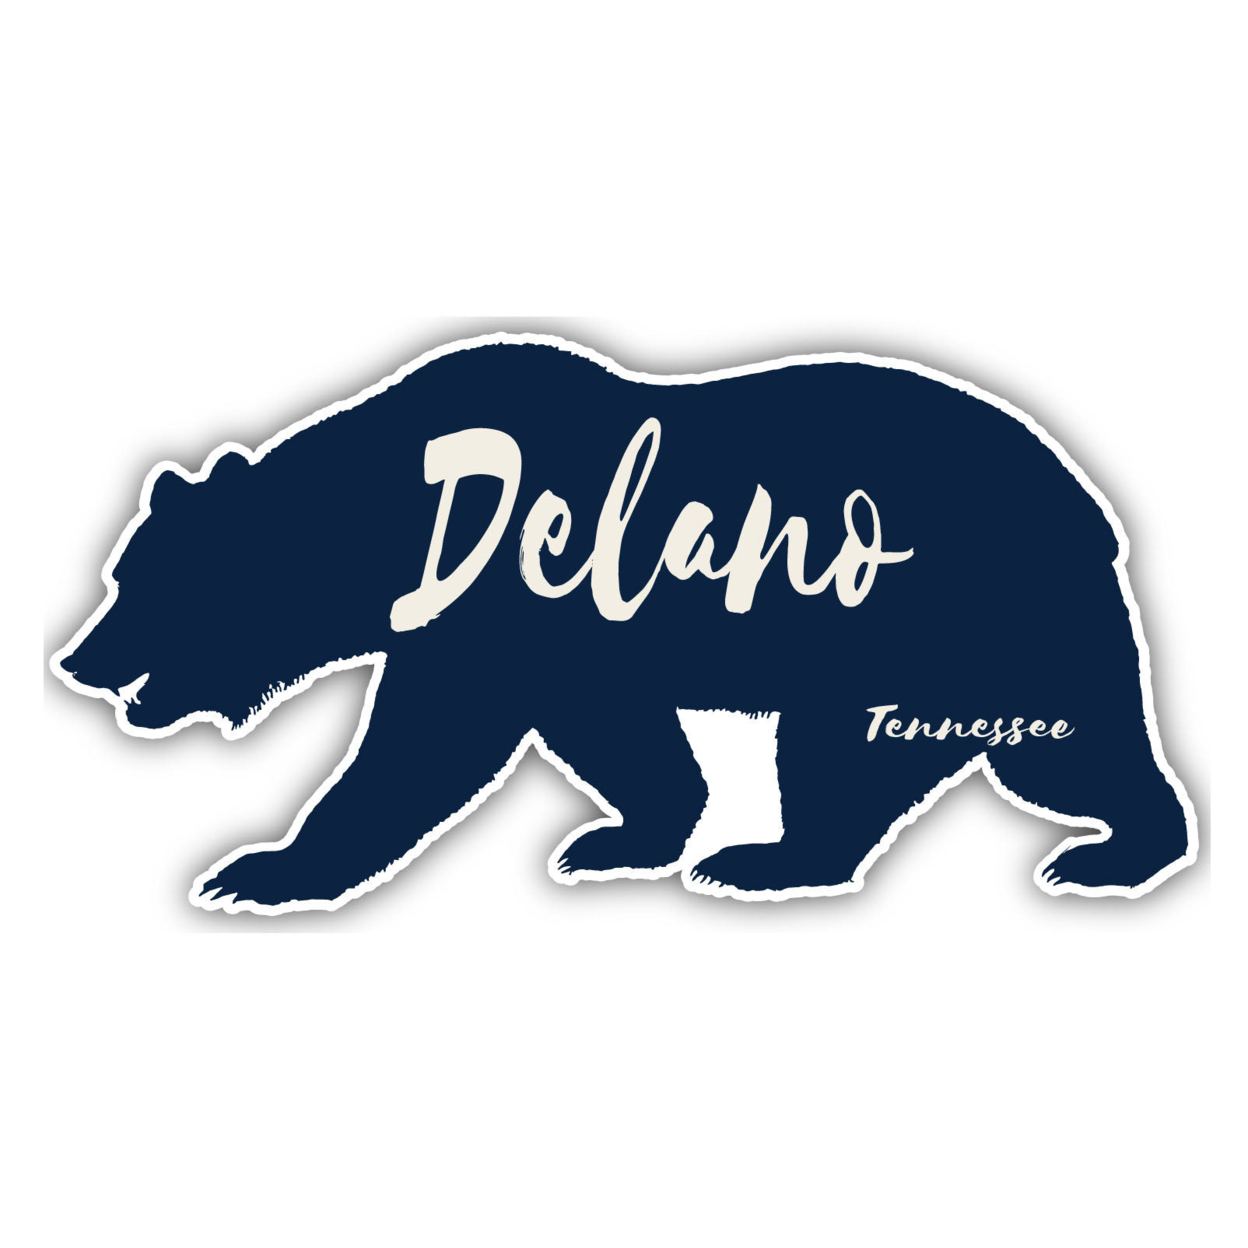 Delano Tennessee Souvenir Decorative Stickers (Choose Theme And Size) - Single Unit, 4-Inch, Bear